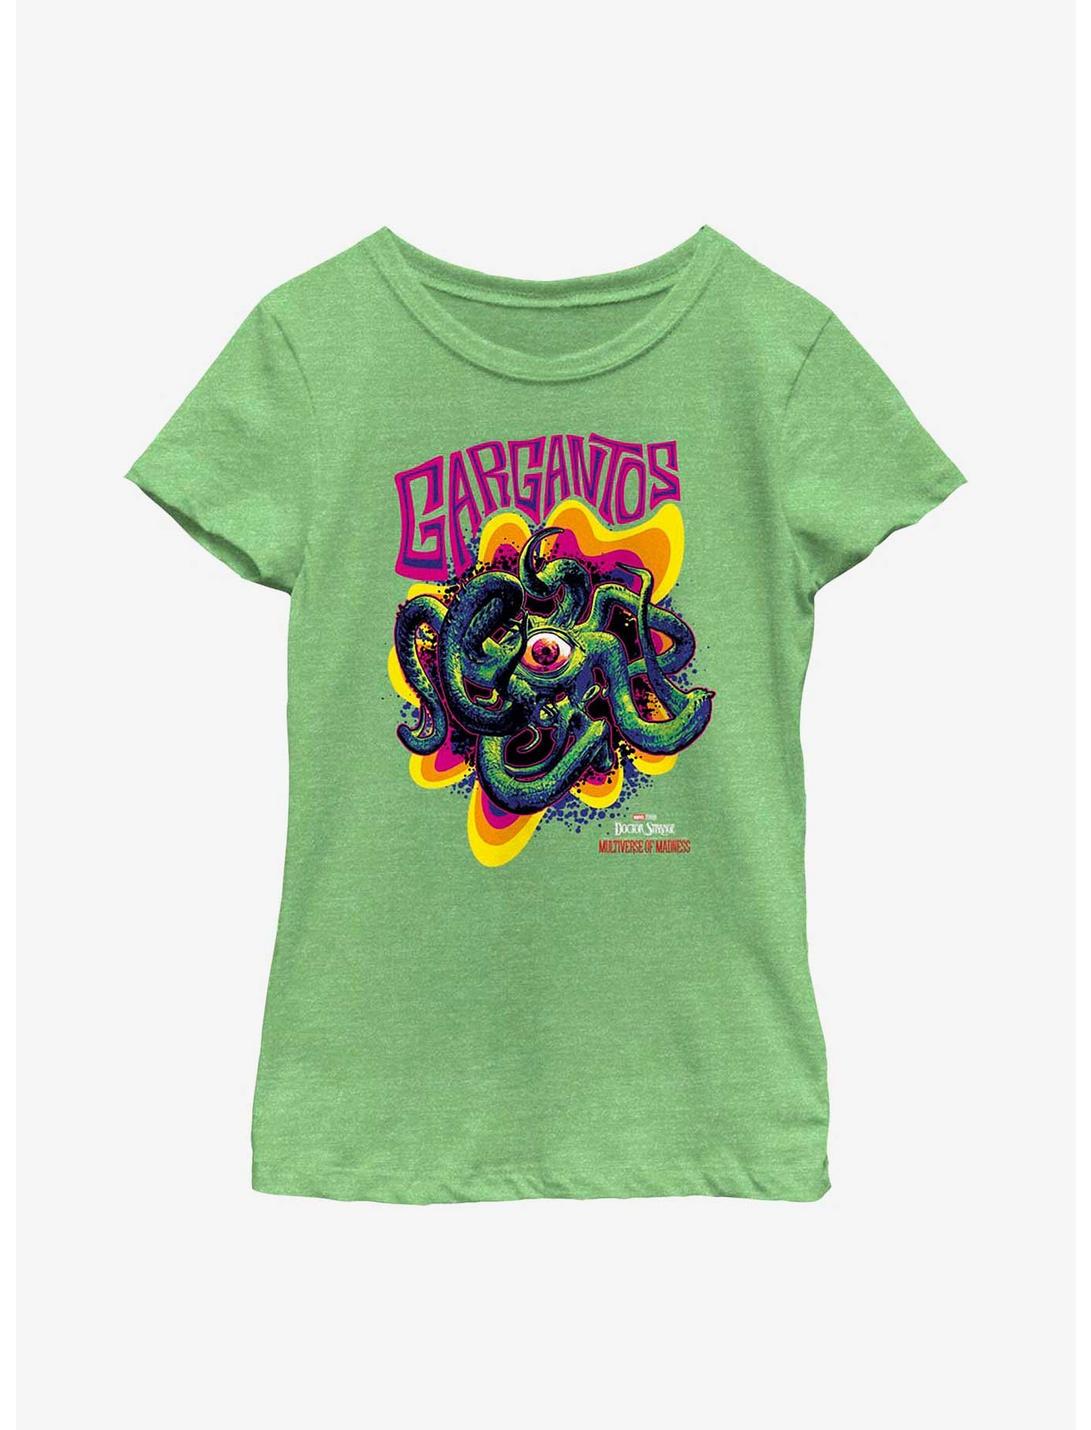 Marvel Doctor Strange Multiverse Of Madness Colorful Gargantos Youth Girls T-Shirt, GRN APPLE, hi-res